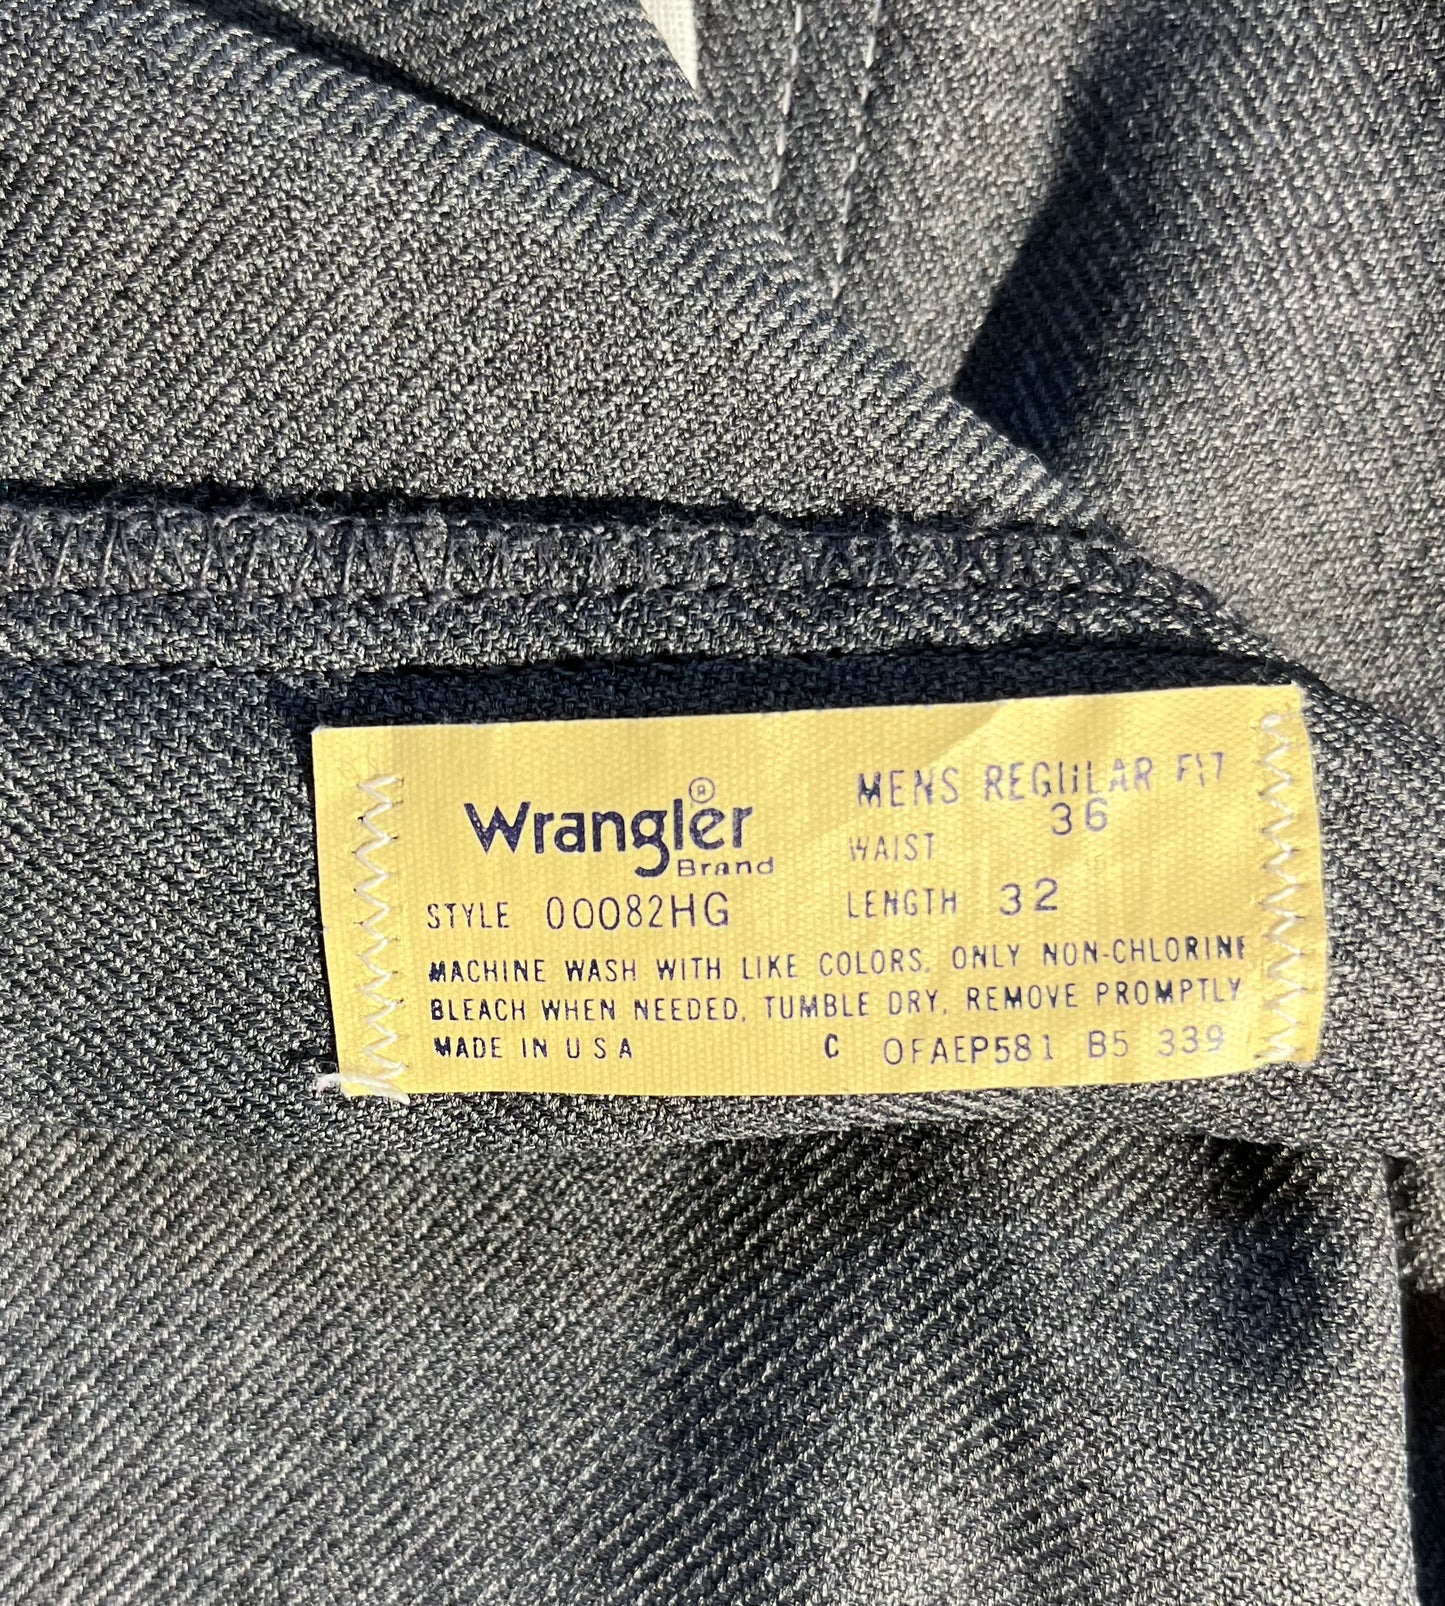 Vintage Wrangler Pants 1970's Bottoms Pleated Soft & Lightweight